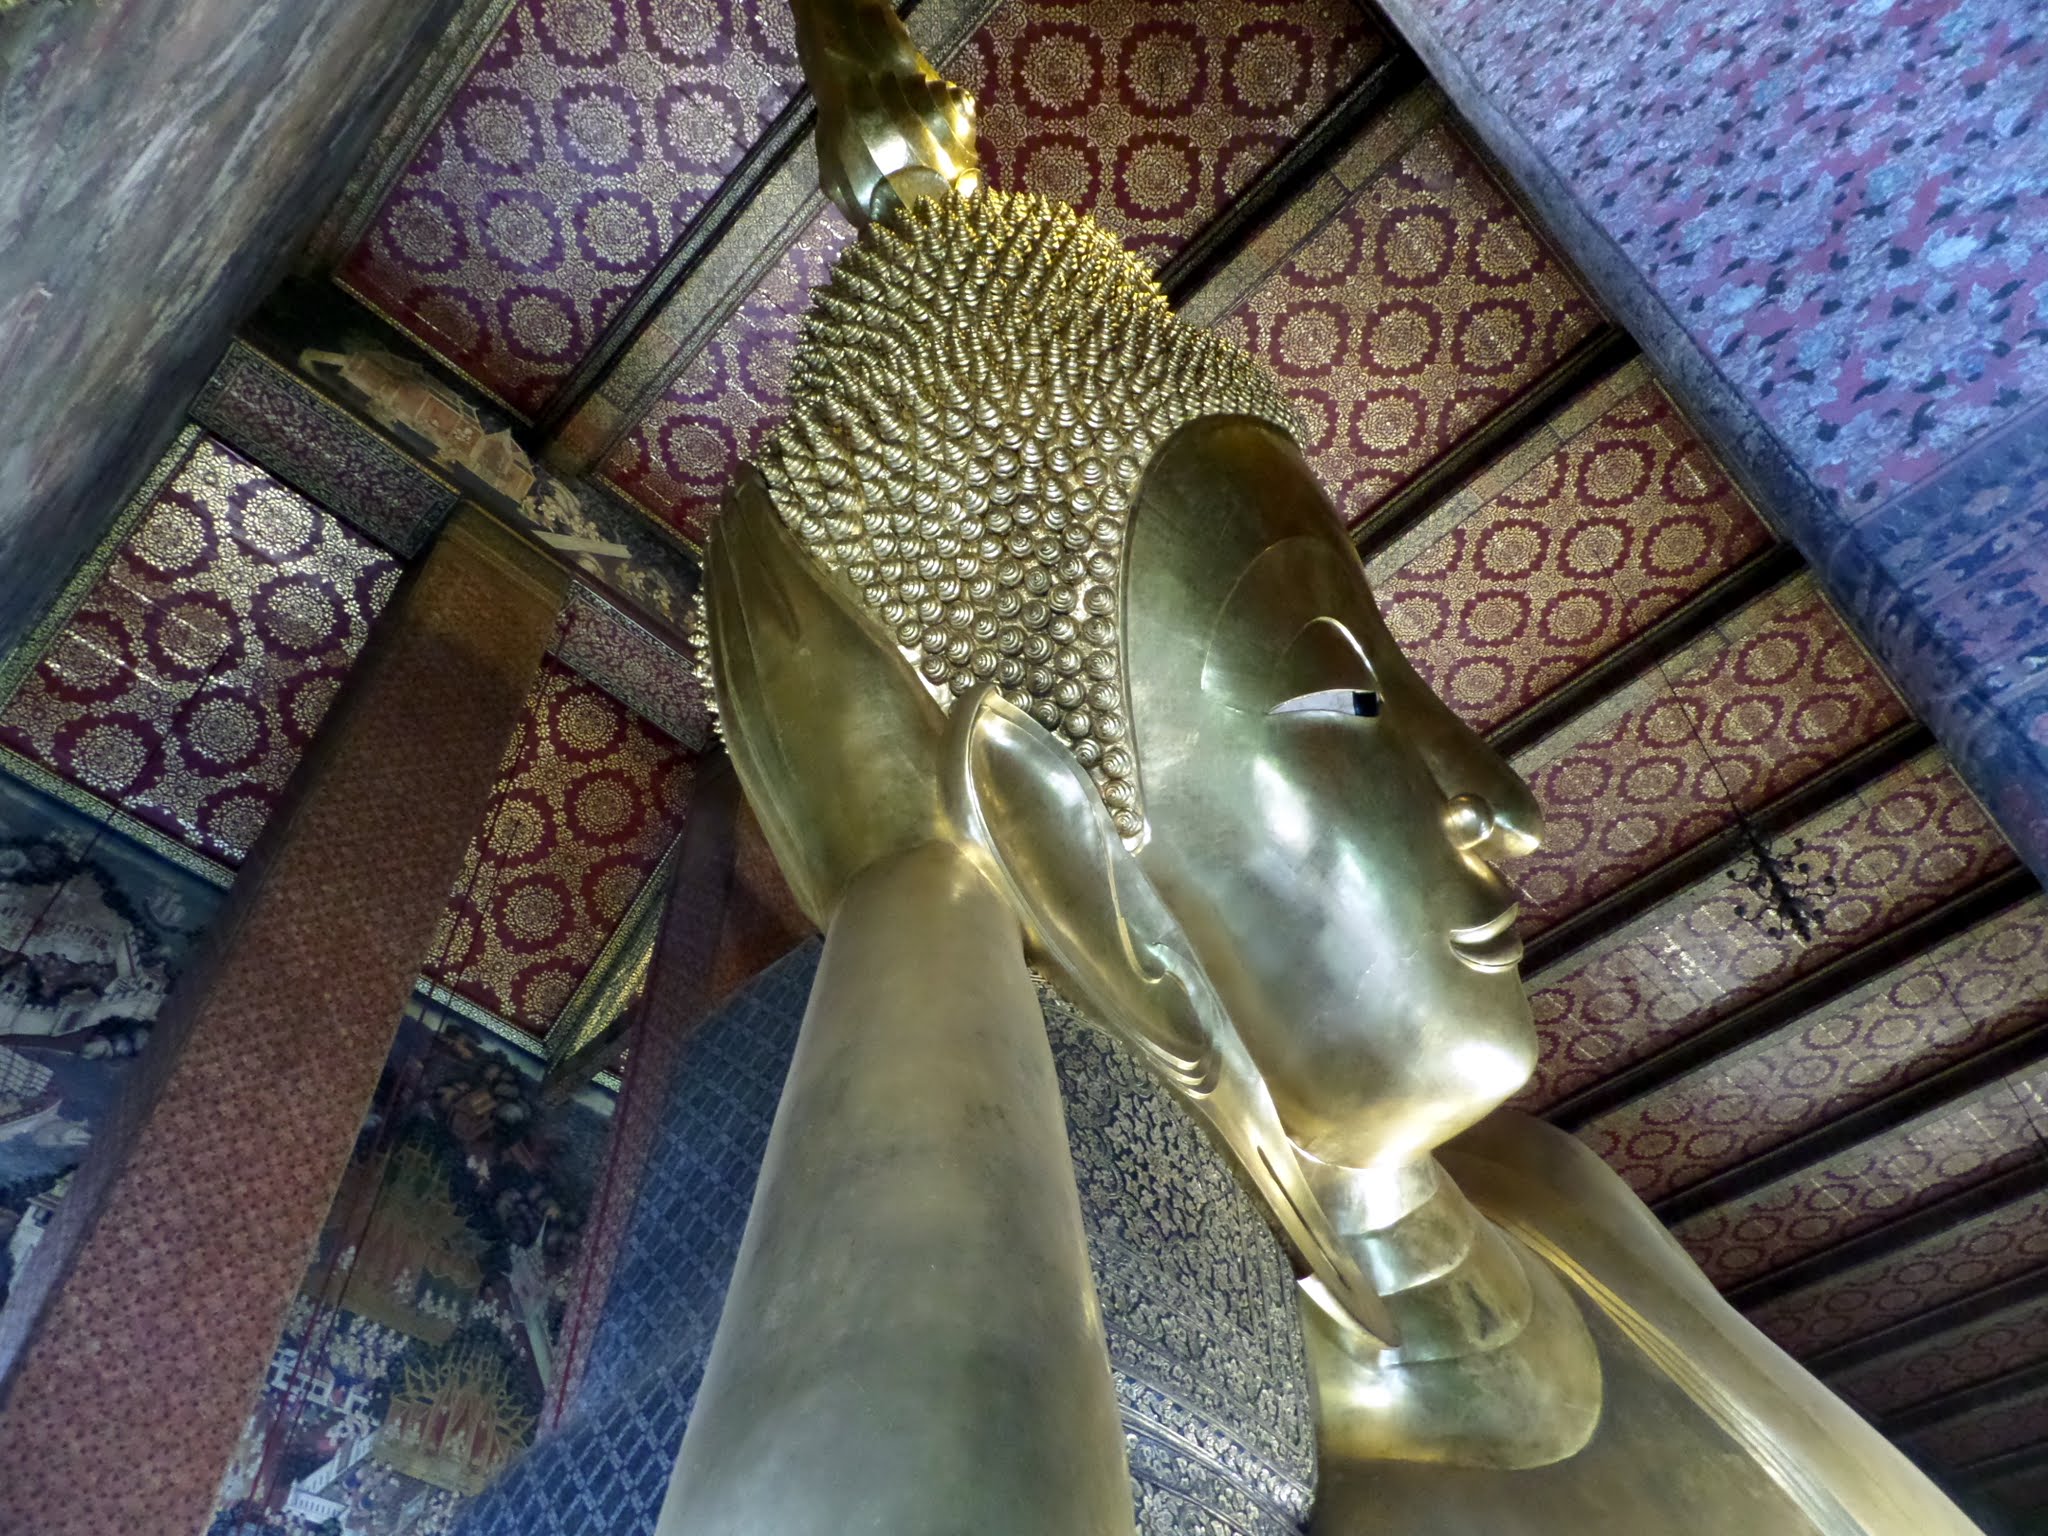 The head of the Reclining Buddha, Bangkok 